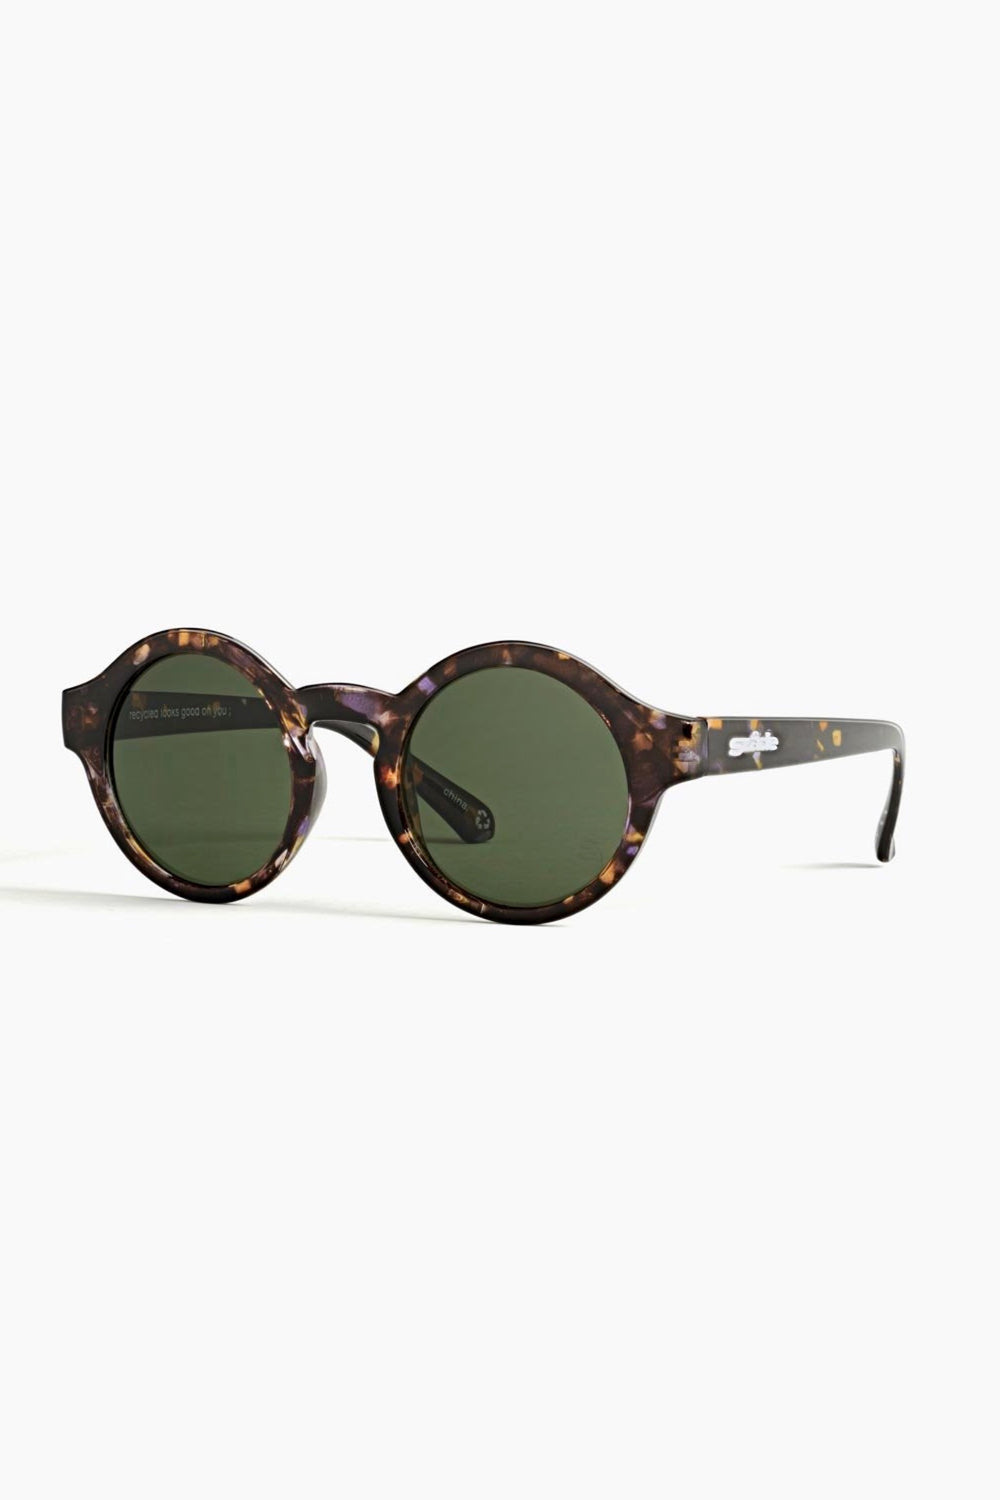 Blackberry Lazenby Sunglasses